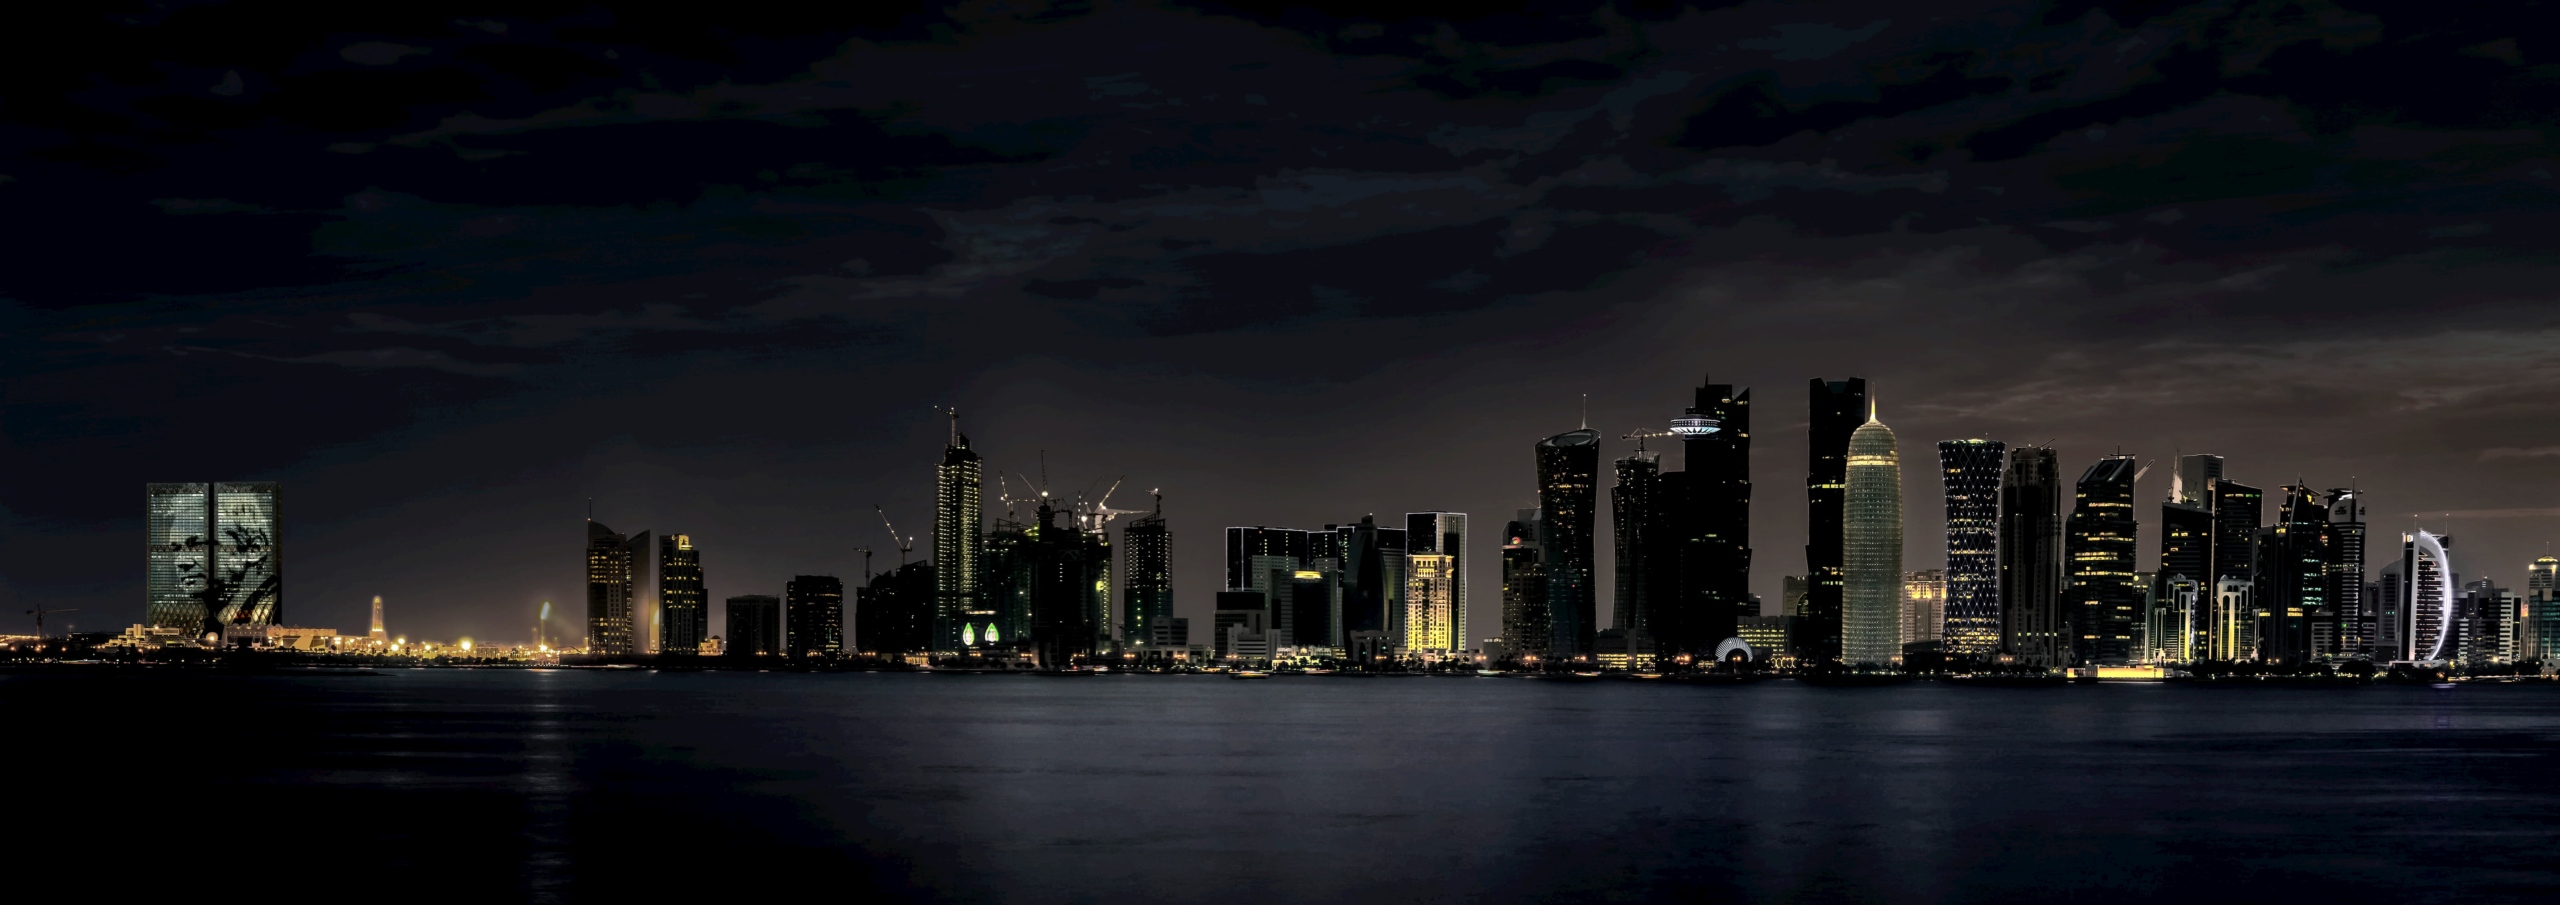 Night visualization of Al Jazeera Headquarters as seen from Doha Bay.